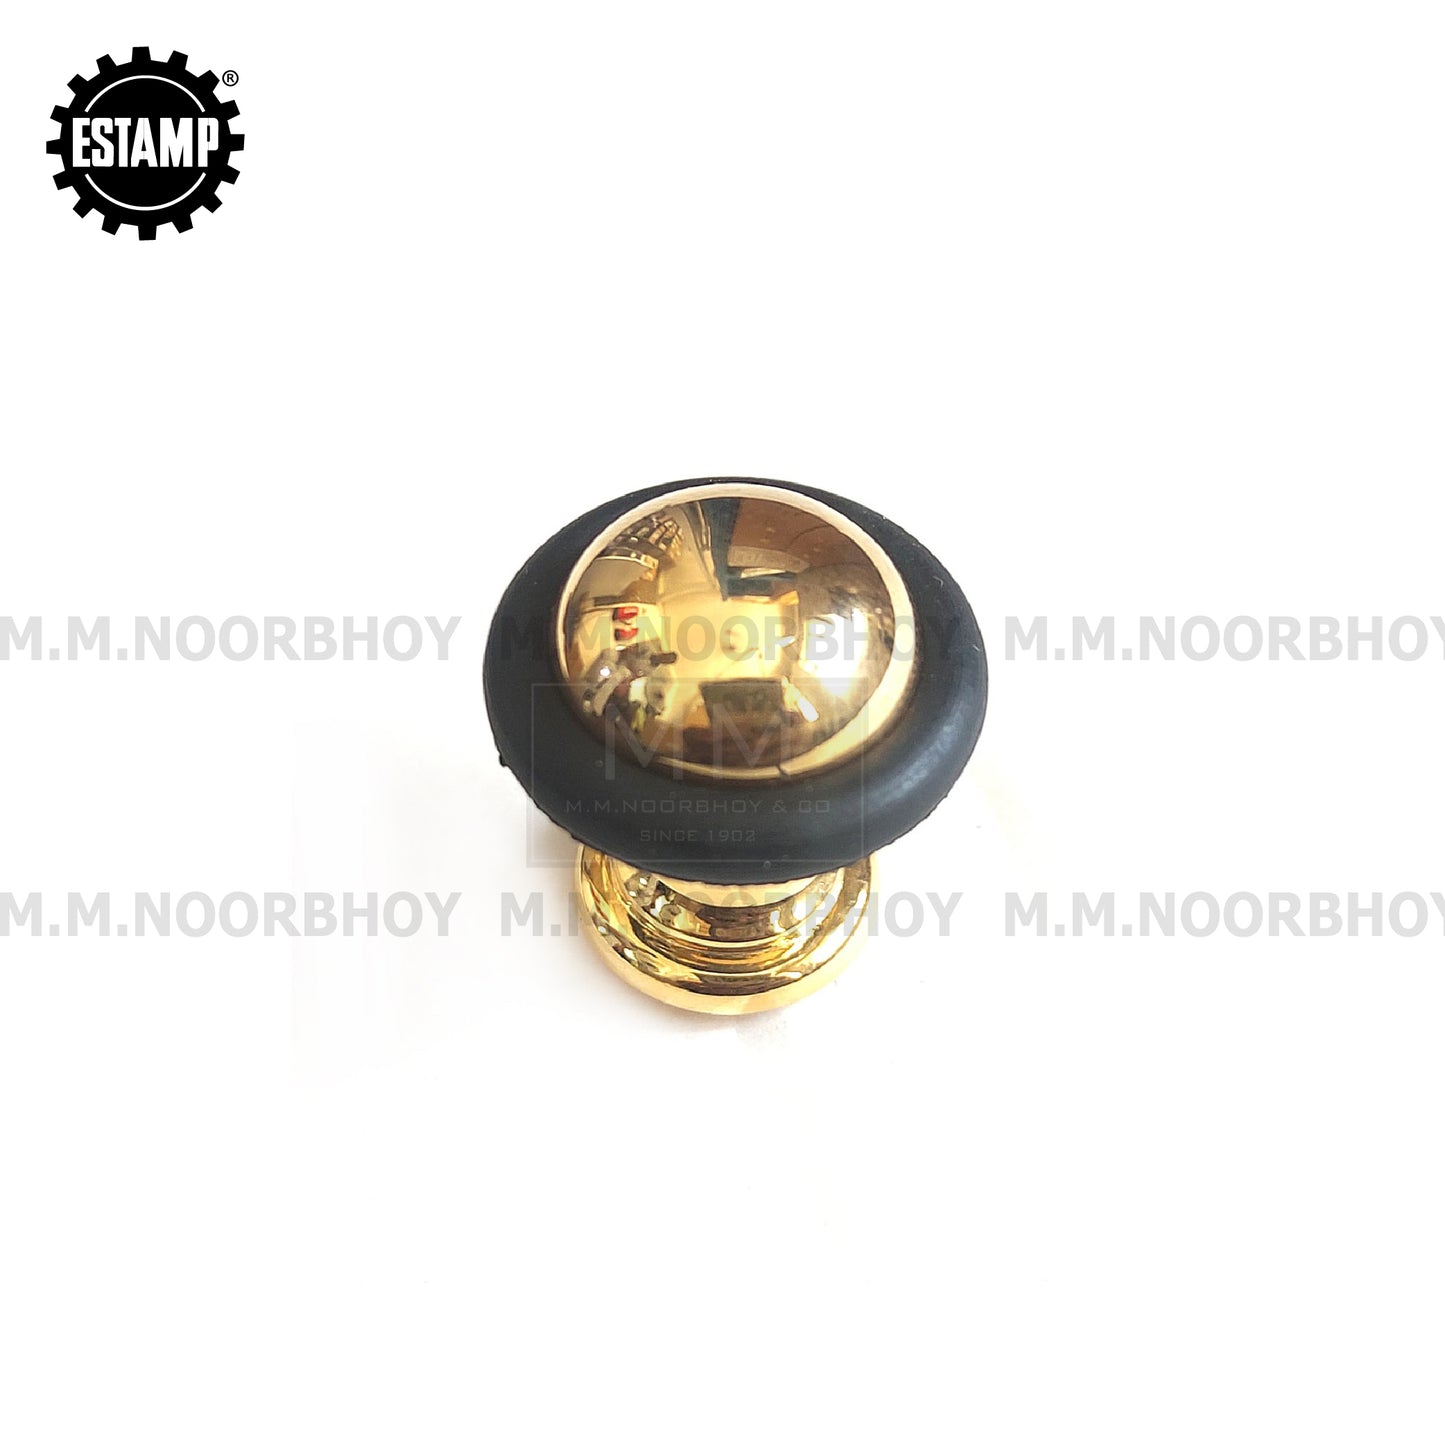 Estamp Gold knob with Black Ring Cabinet Knob Each - 7771.331